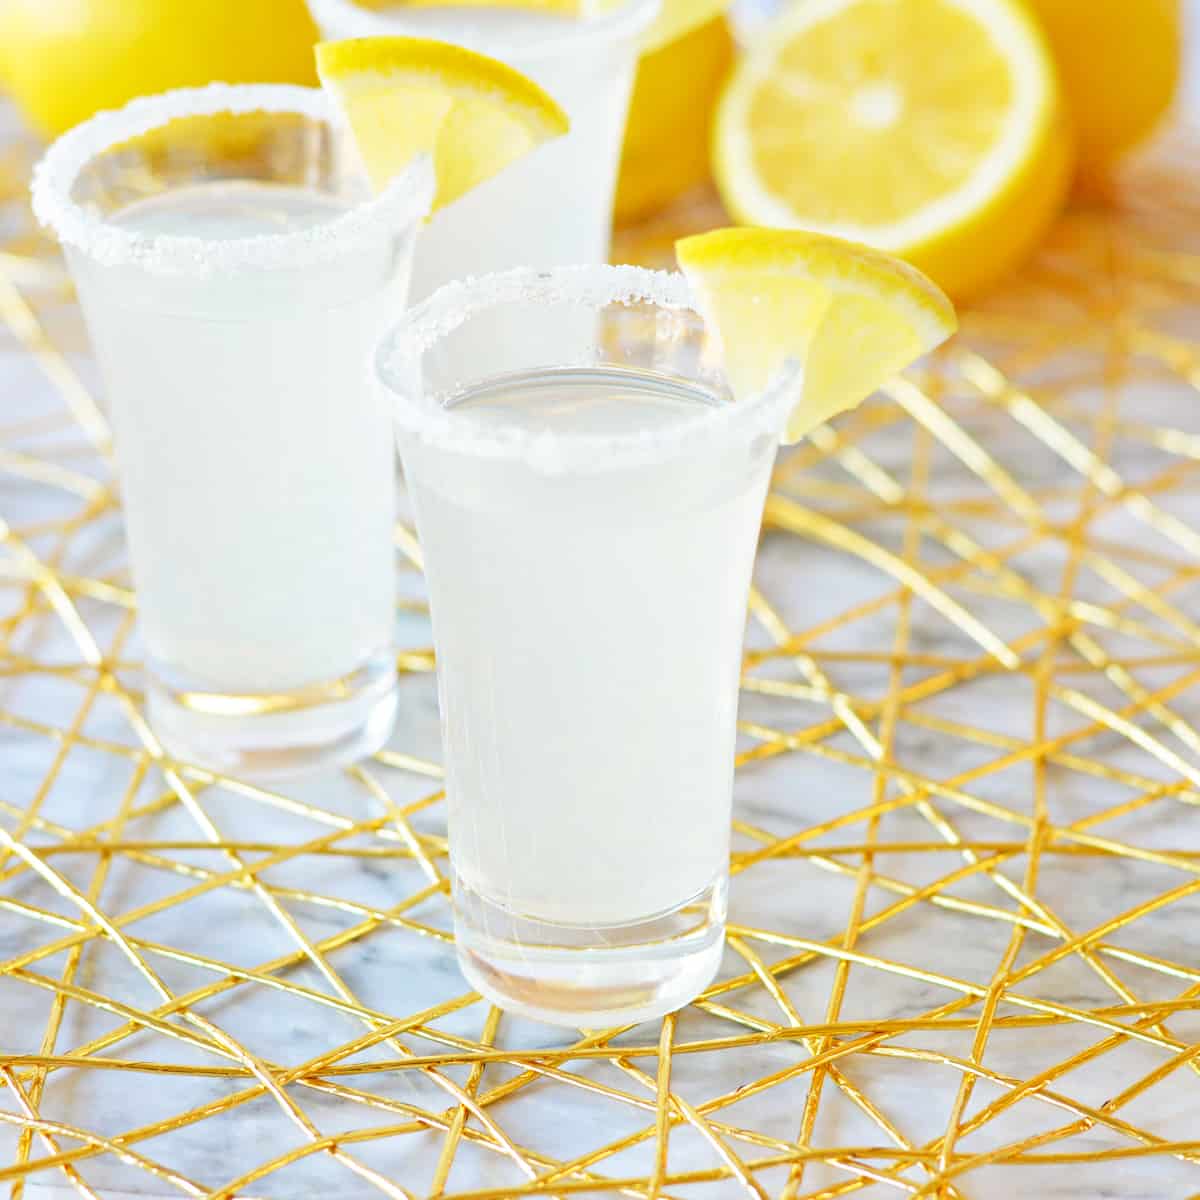 Lemon drop shot with rimmed glass and lemon garnish.